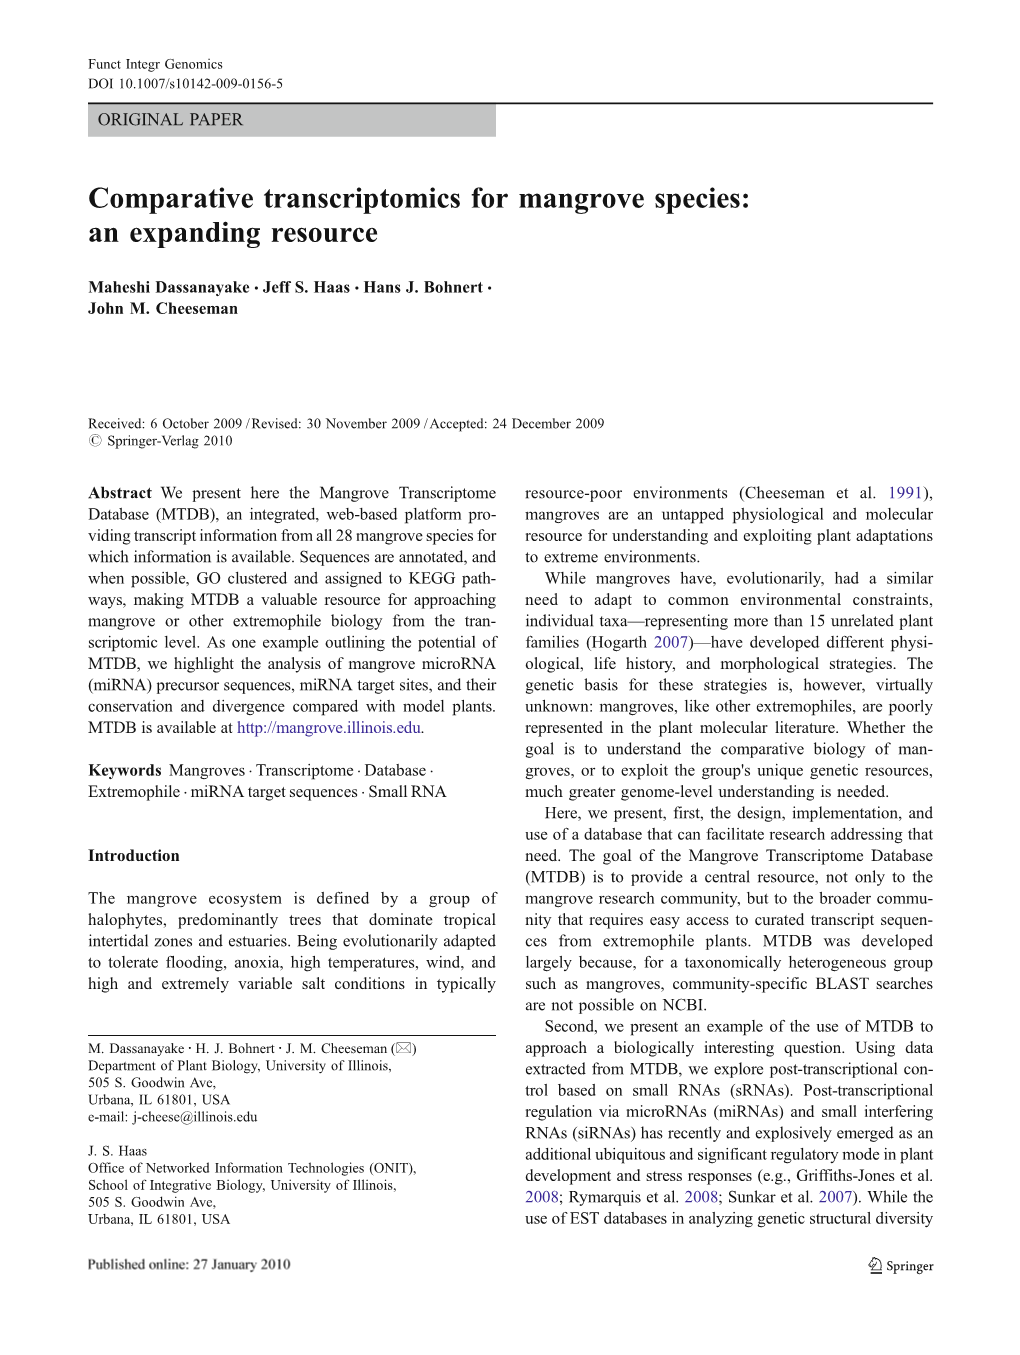 Comparative Transcriptomics for Mangrove Species: an Expanding Resource